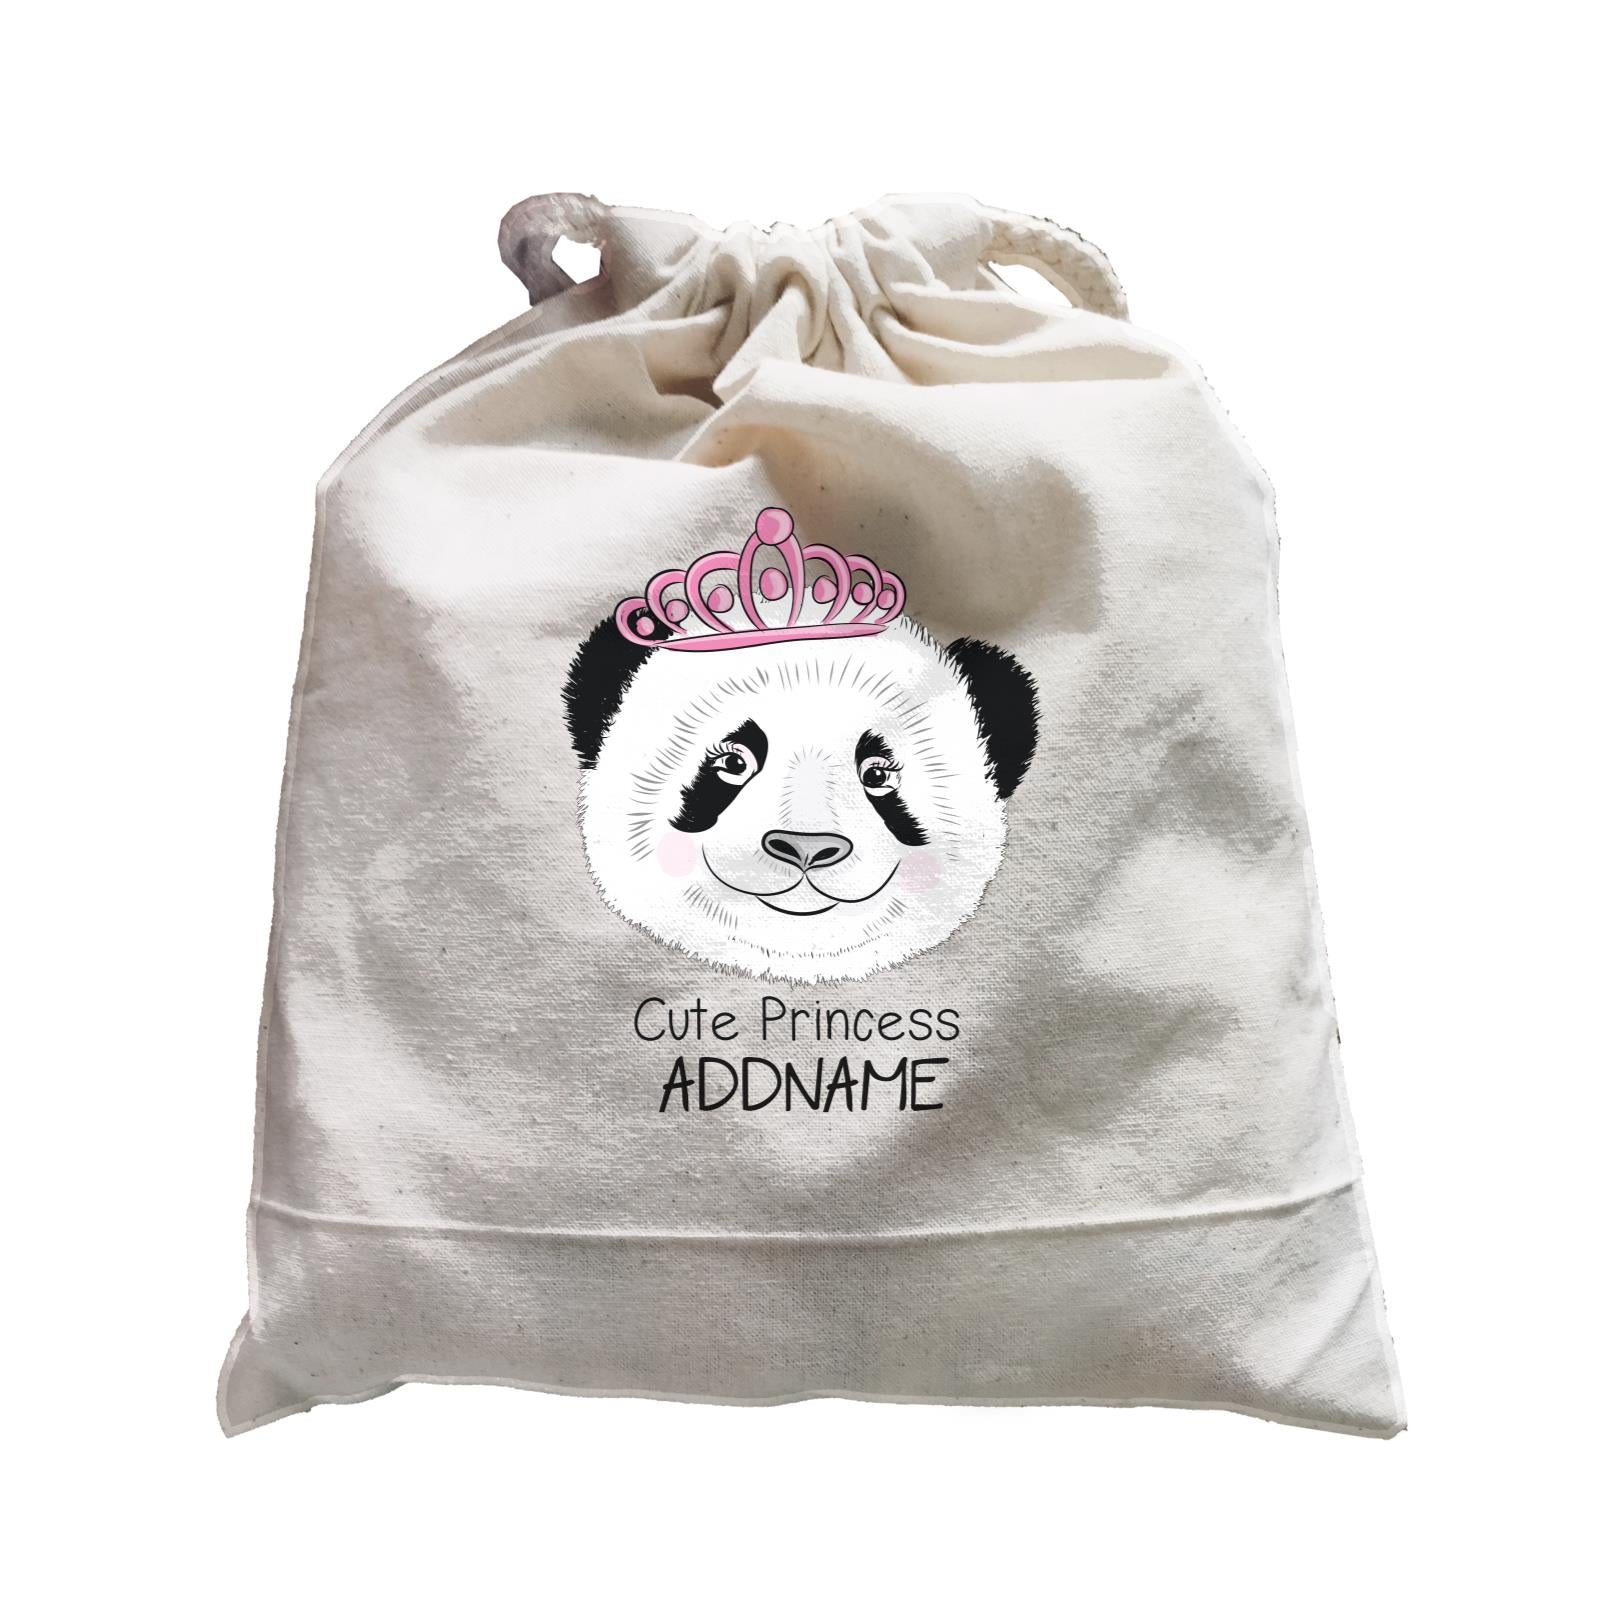 Cool Vibrant Series Cute Princess Panda Addname Satchel